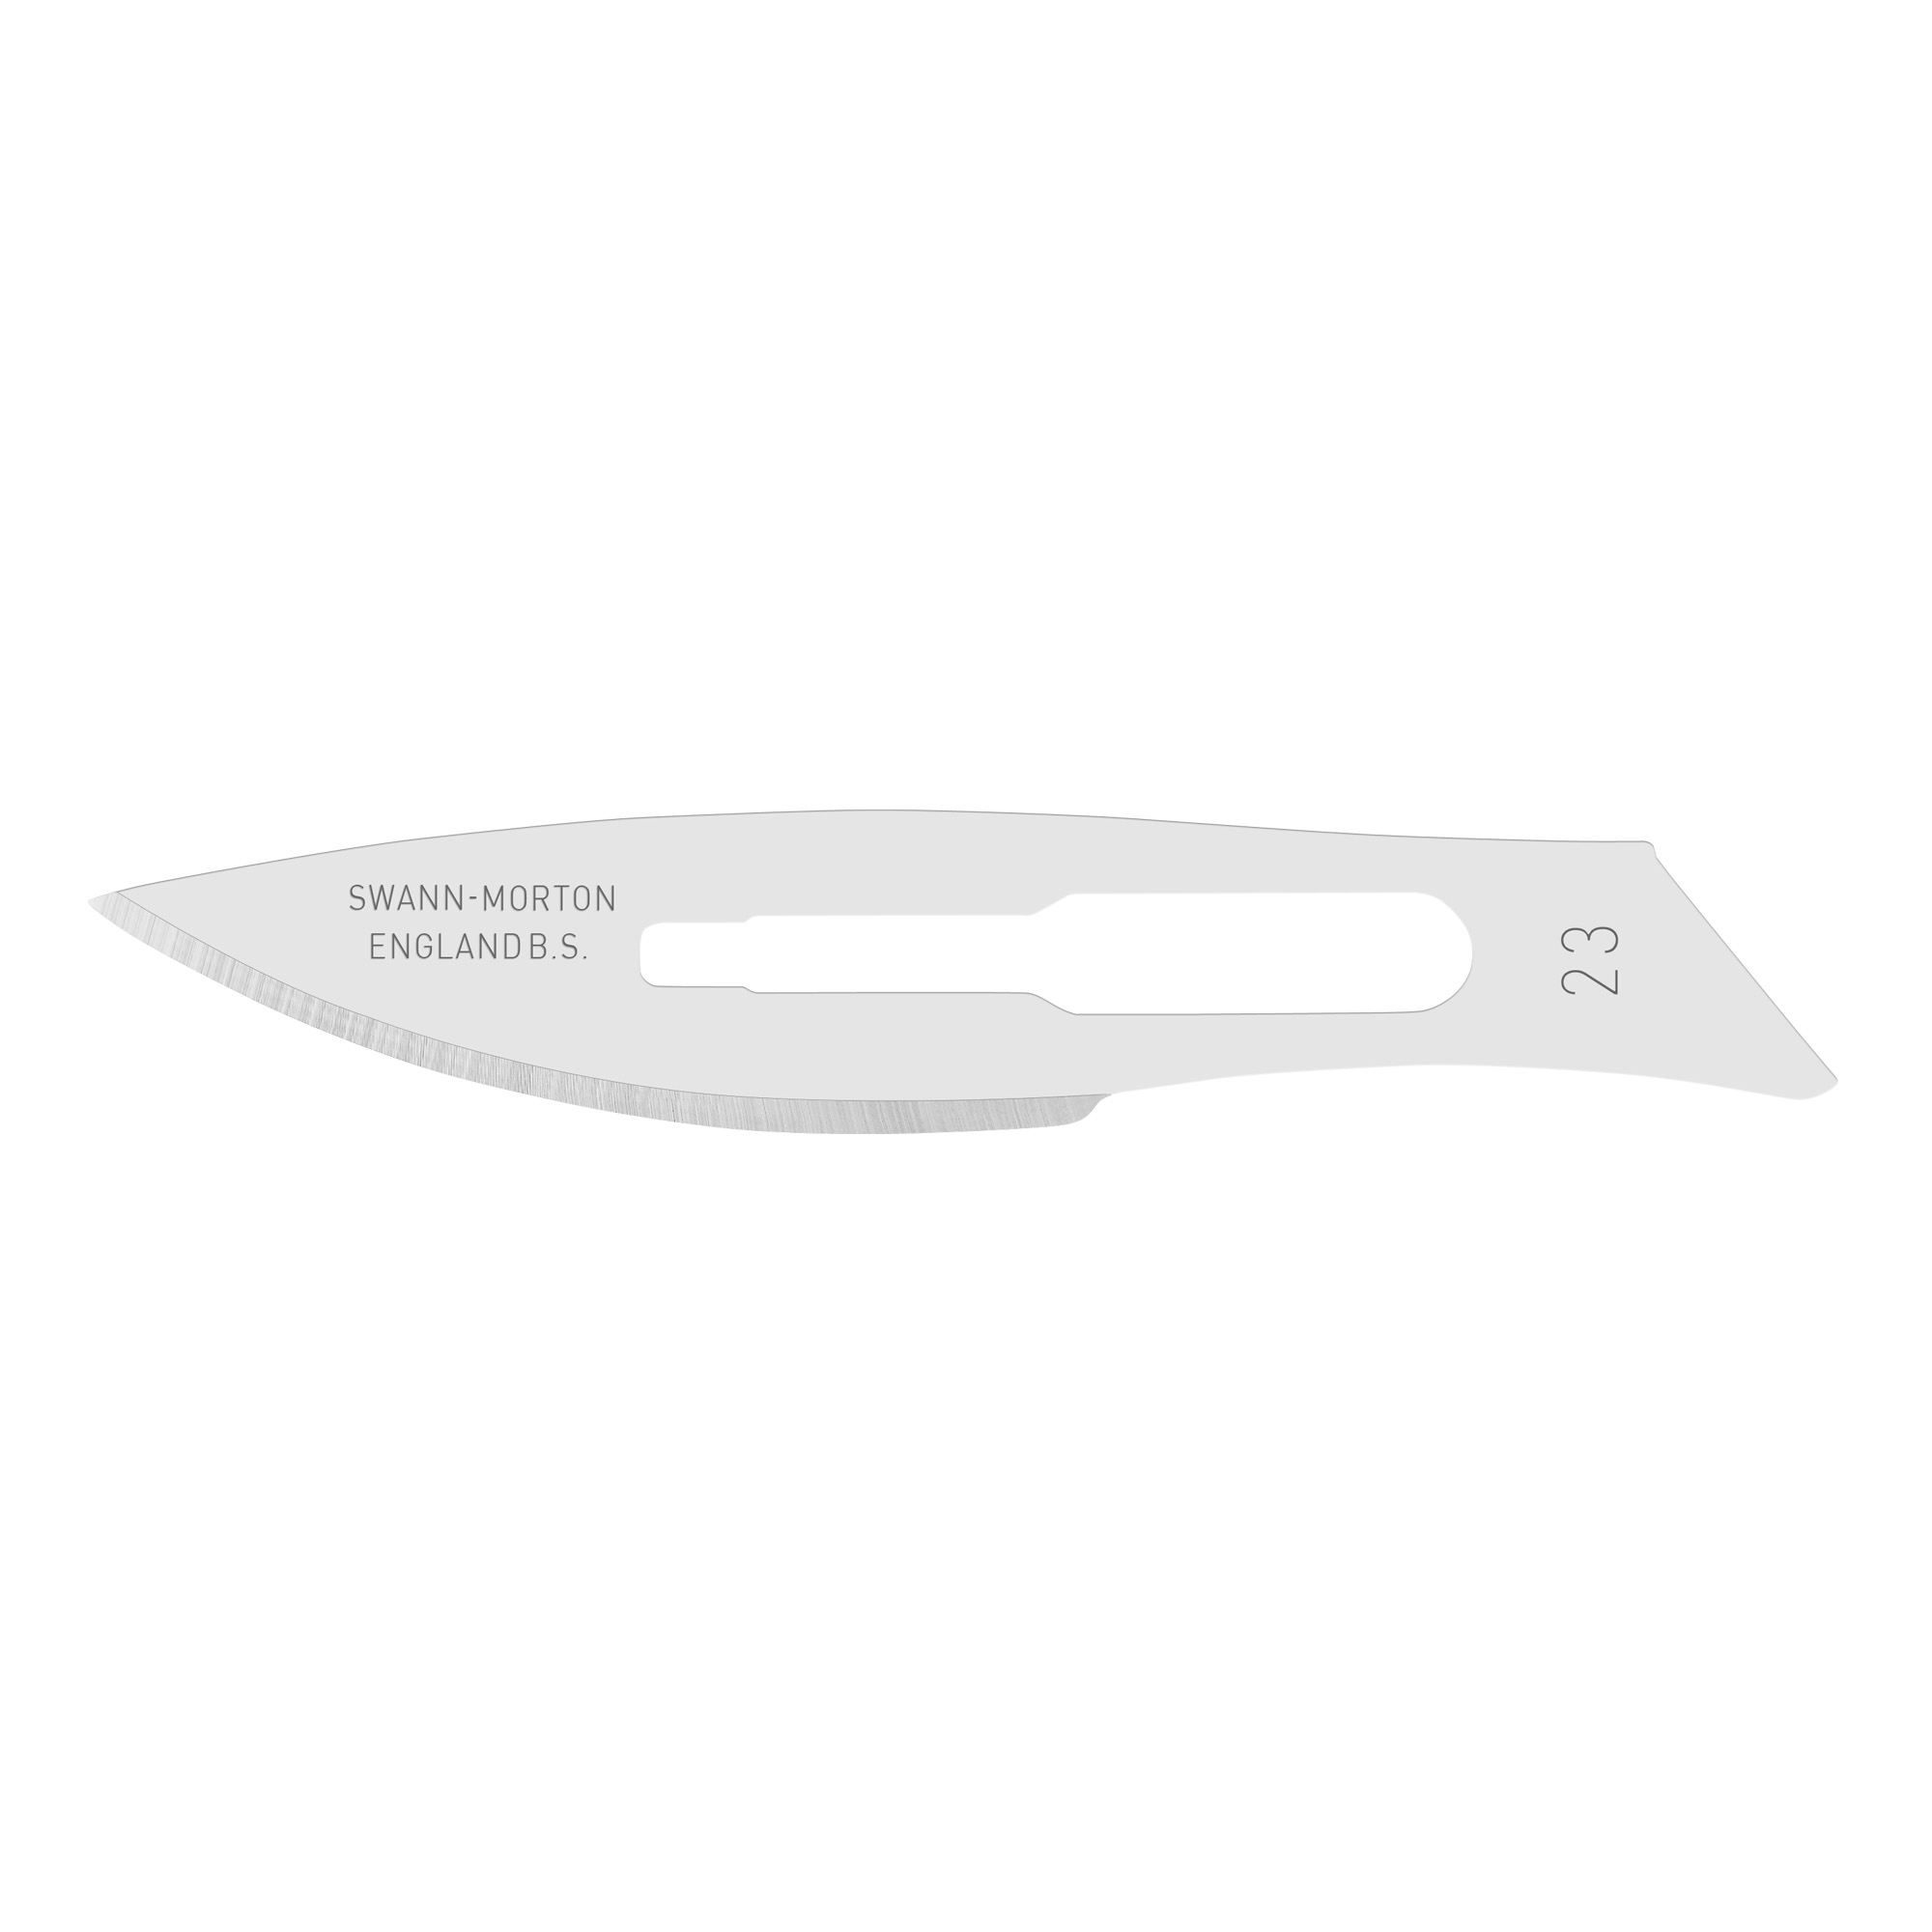 Sterile single-use professional scalpel blades Swann-Morton size 23 100 pieces